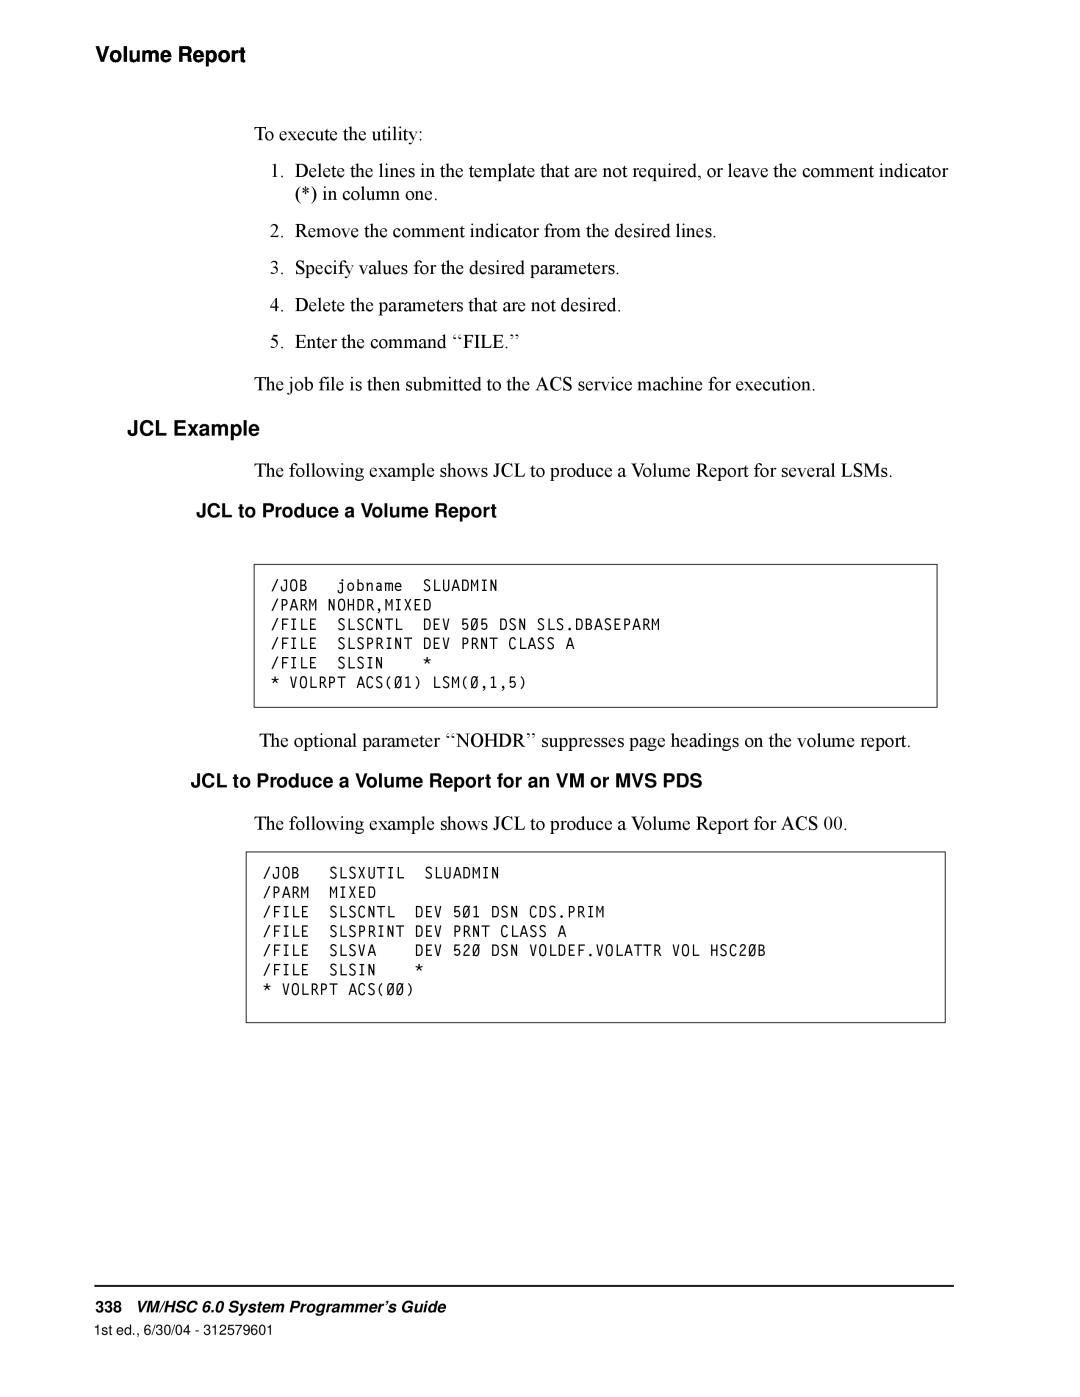 StorageTek 6 manual JCL to Produce a Volume Report, JCL Example 